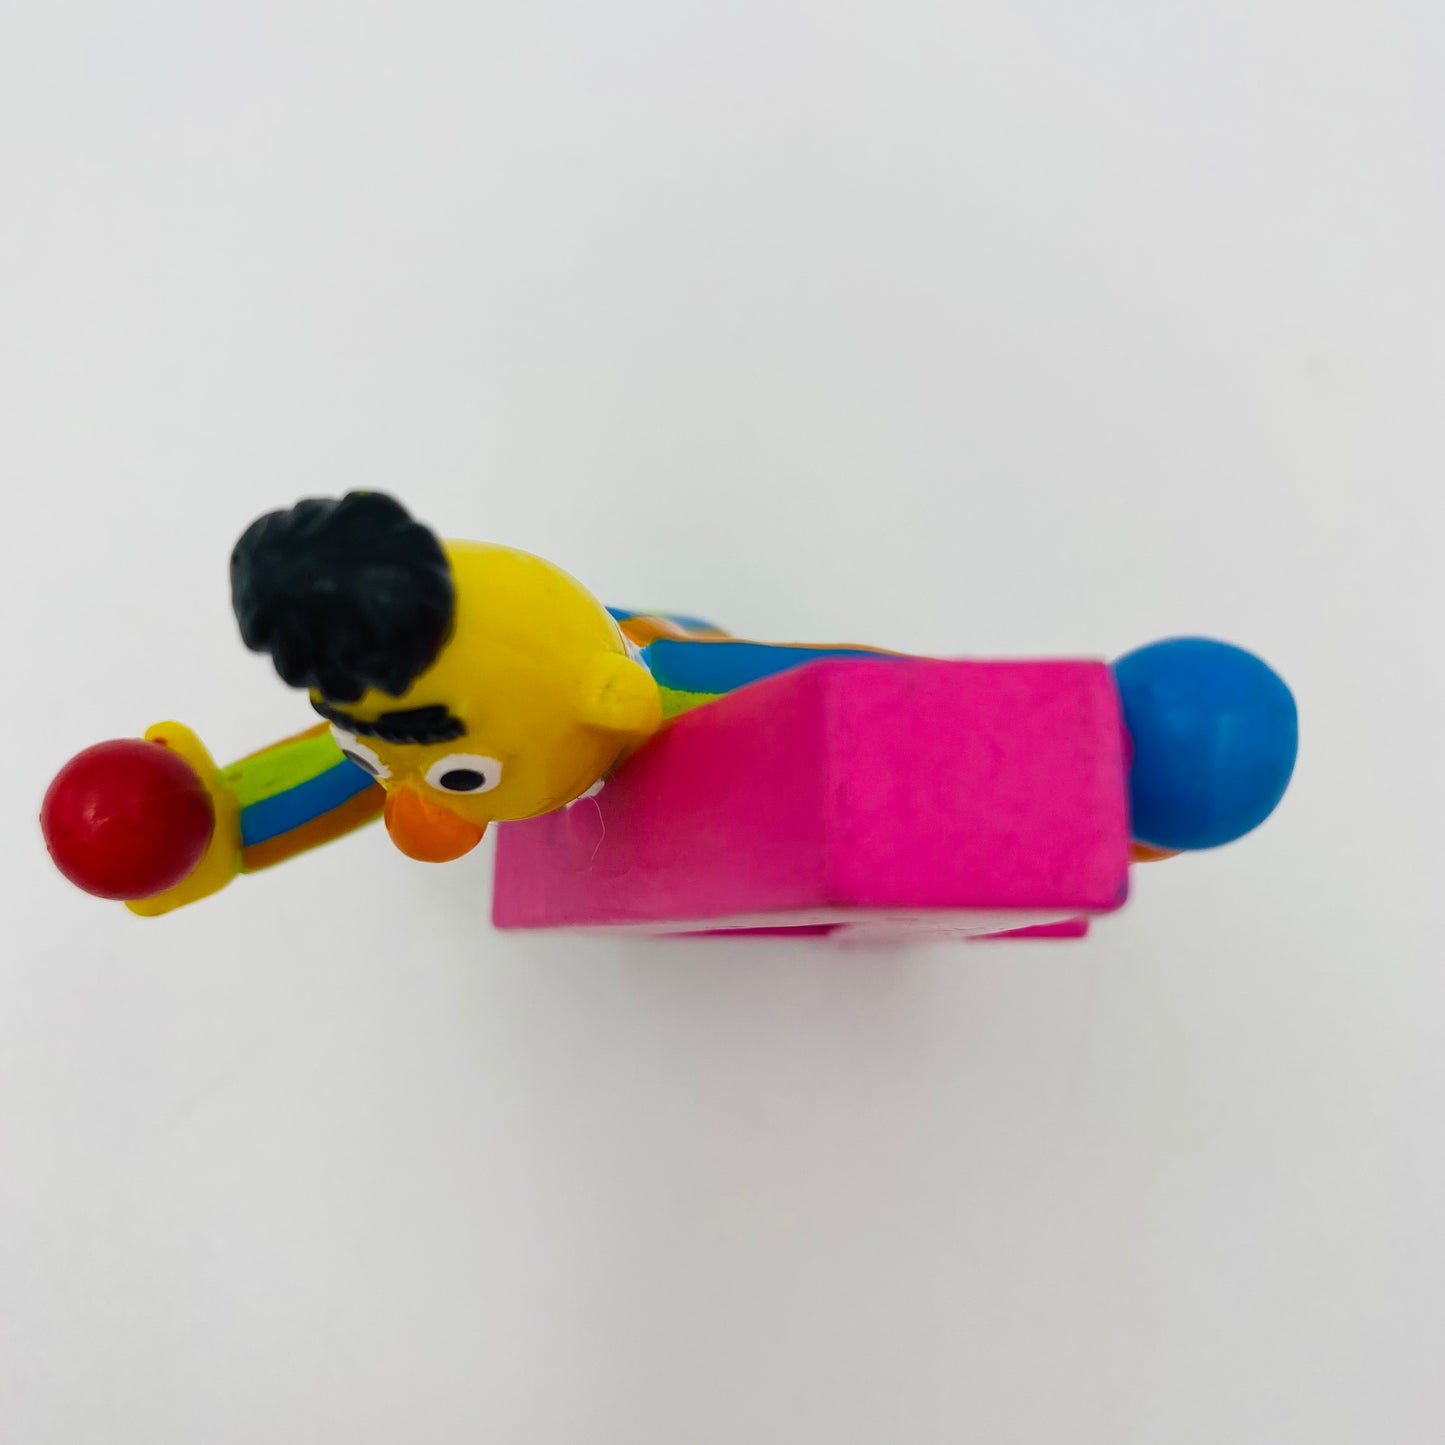 Sesame Street: Number 4 Bert loose figurine Applause